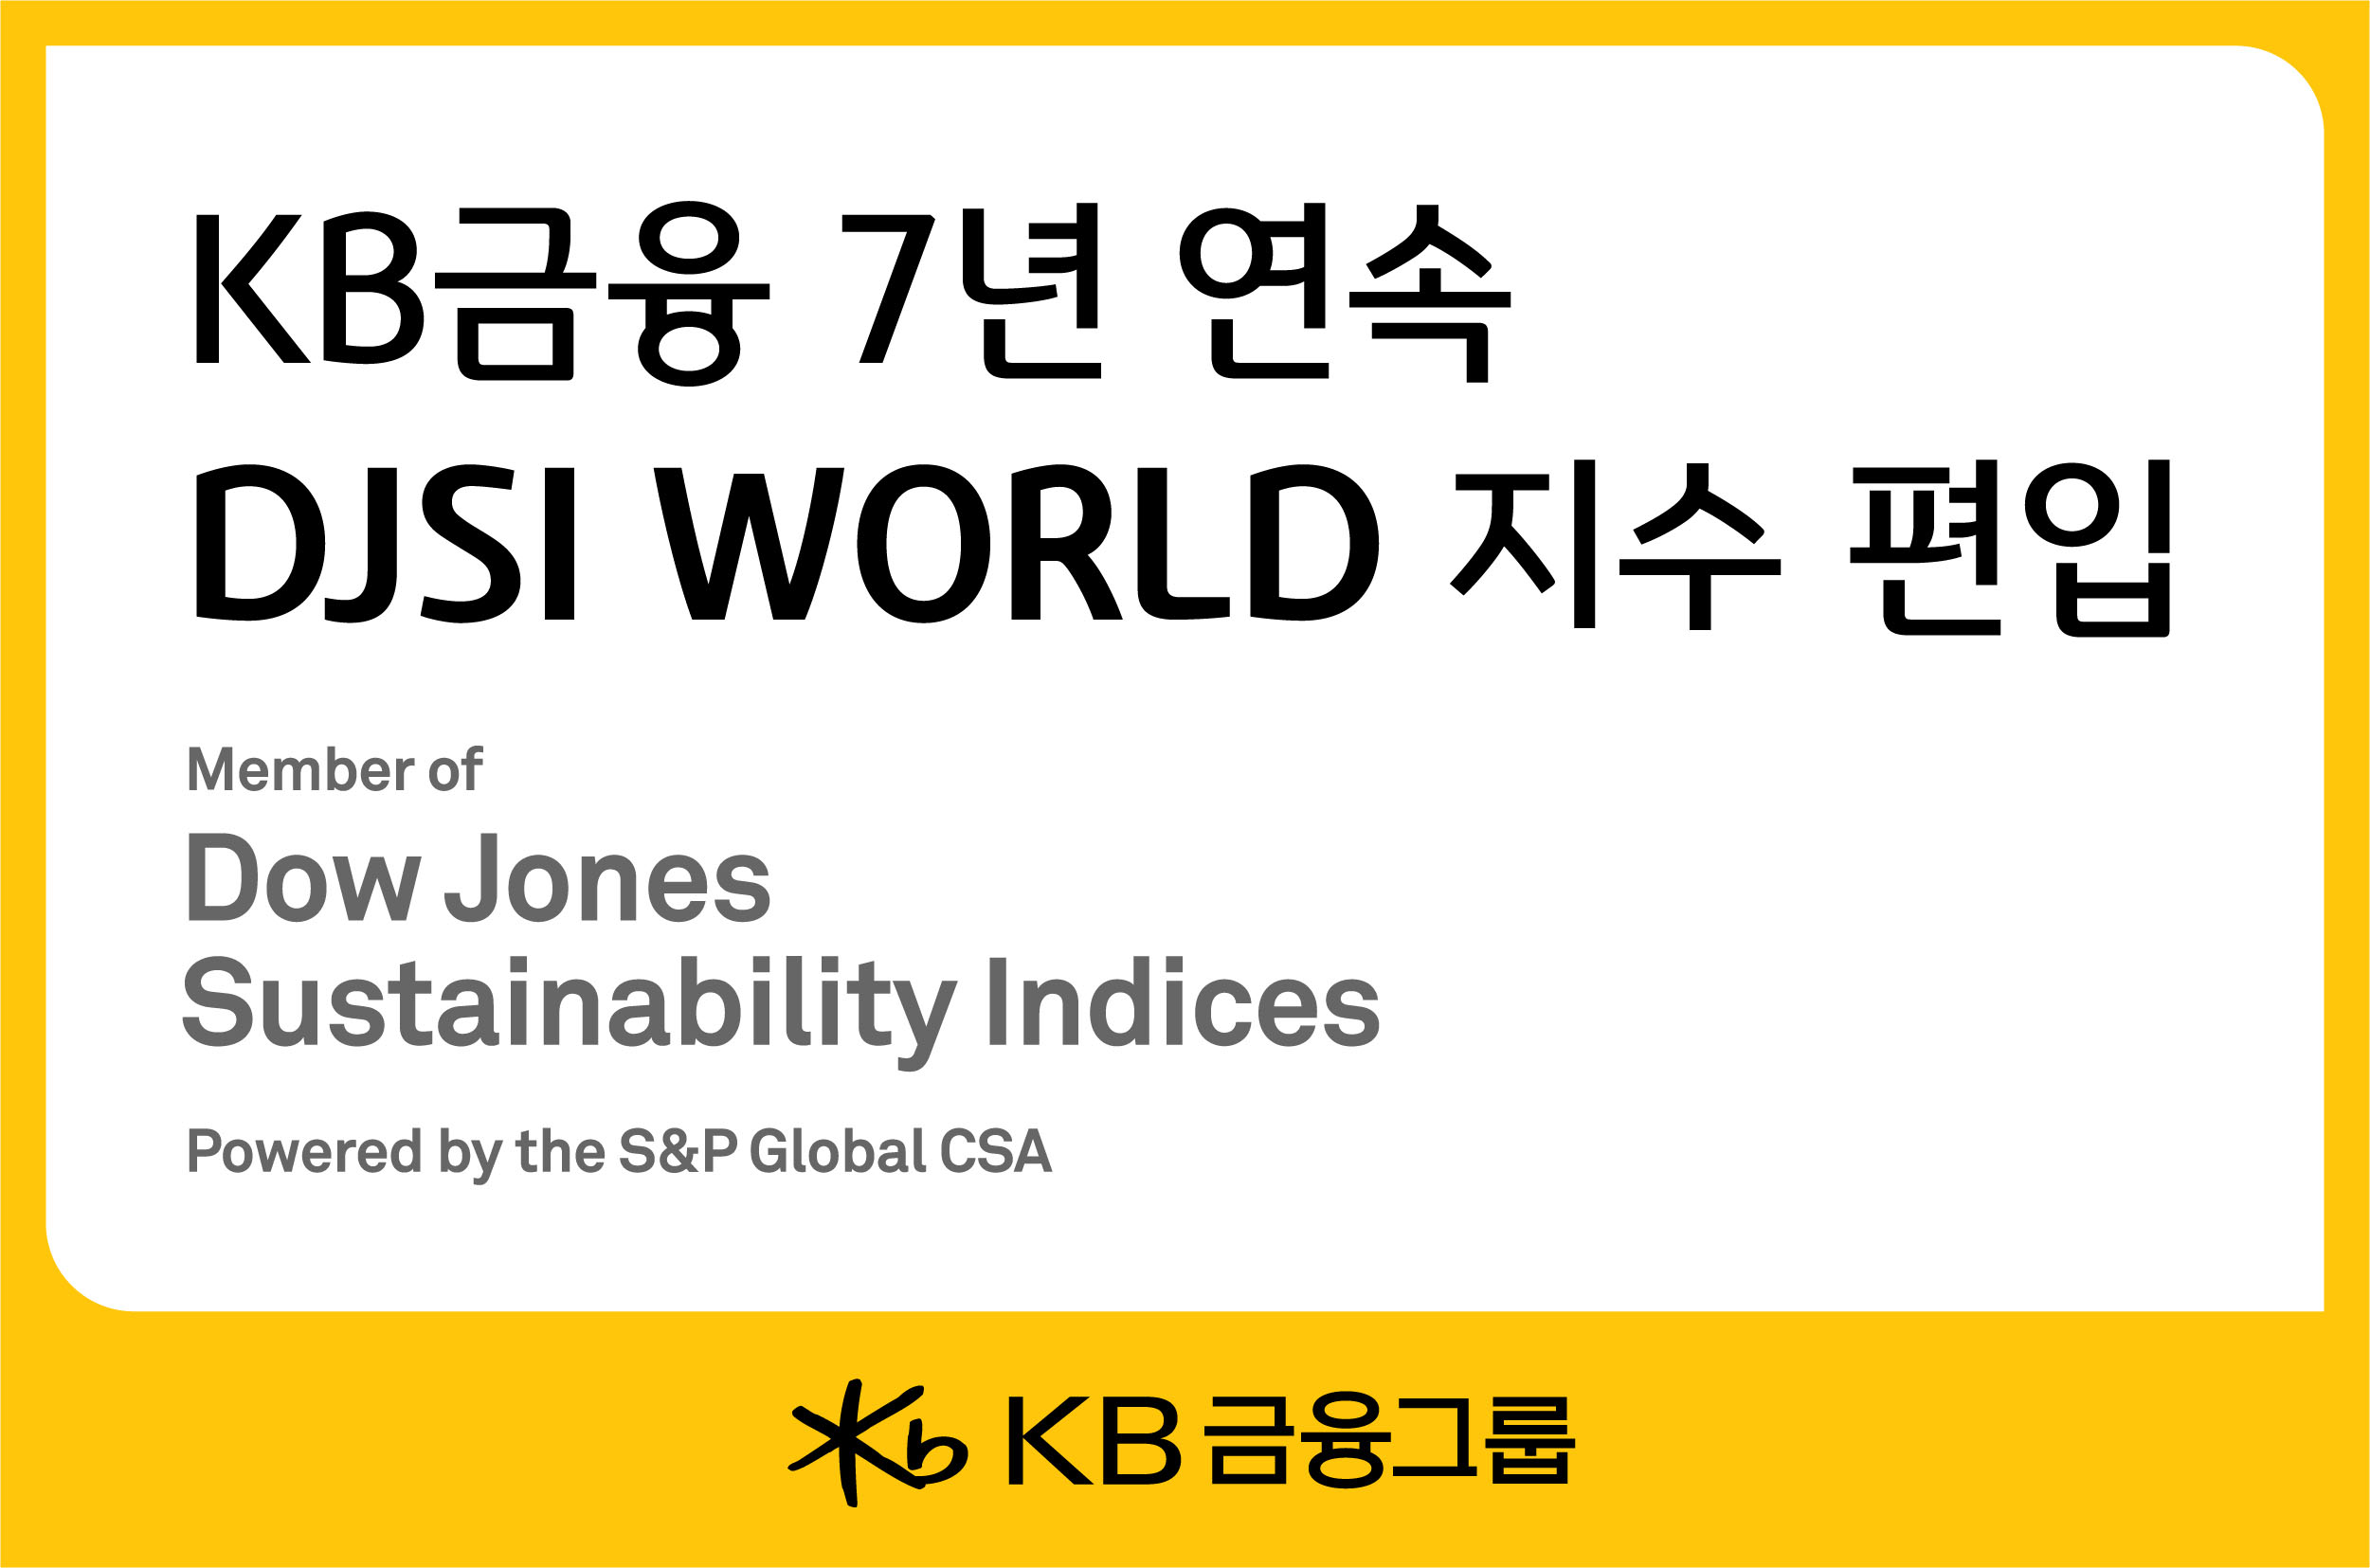 Dow Jones Sustainability Indices (DJSI) image